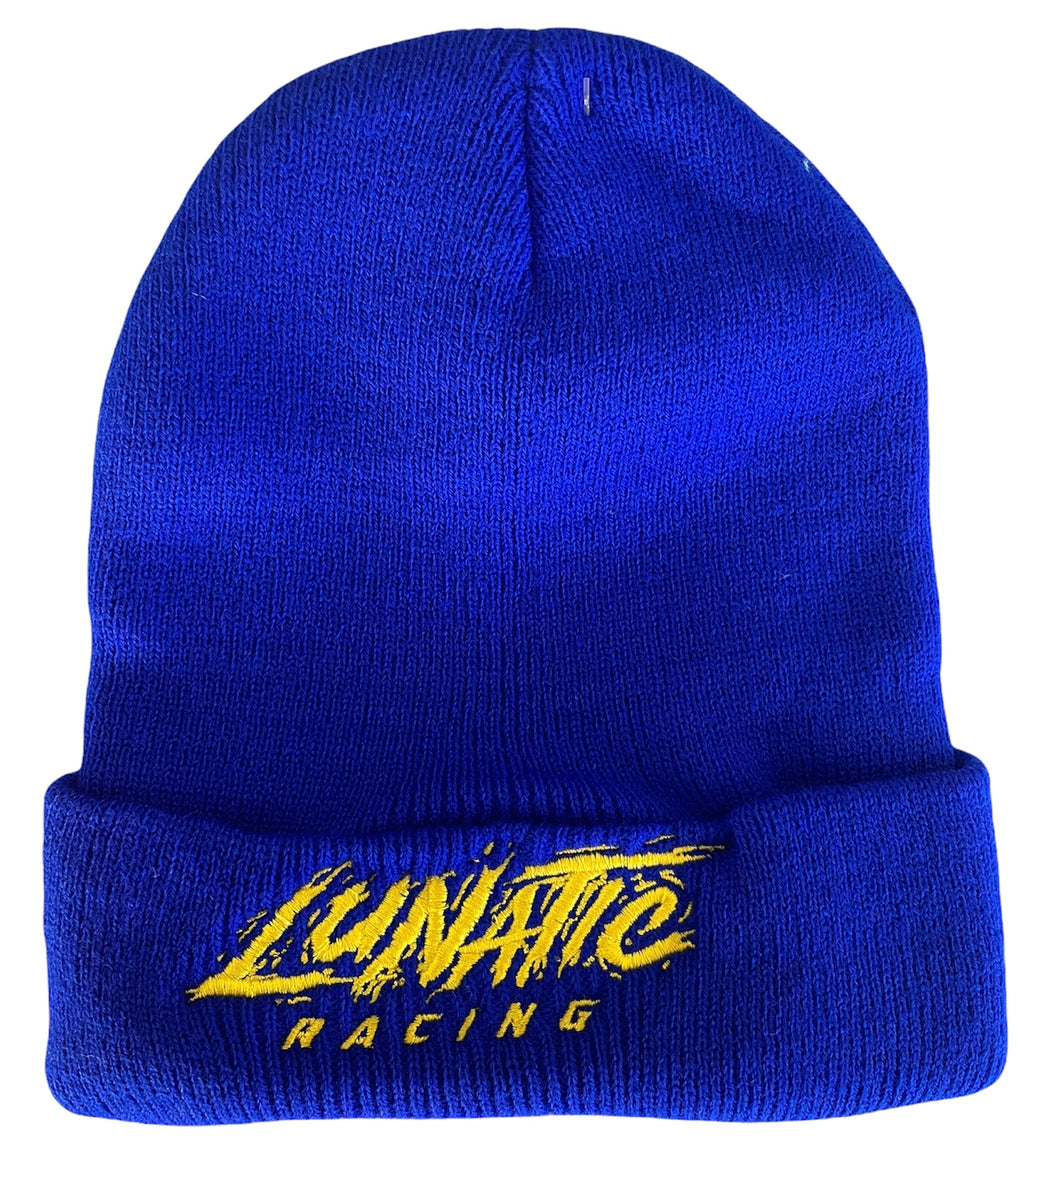 Lunatic Racing Beanie